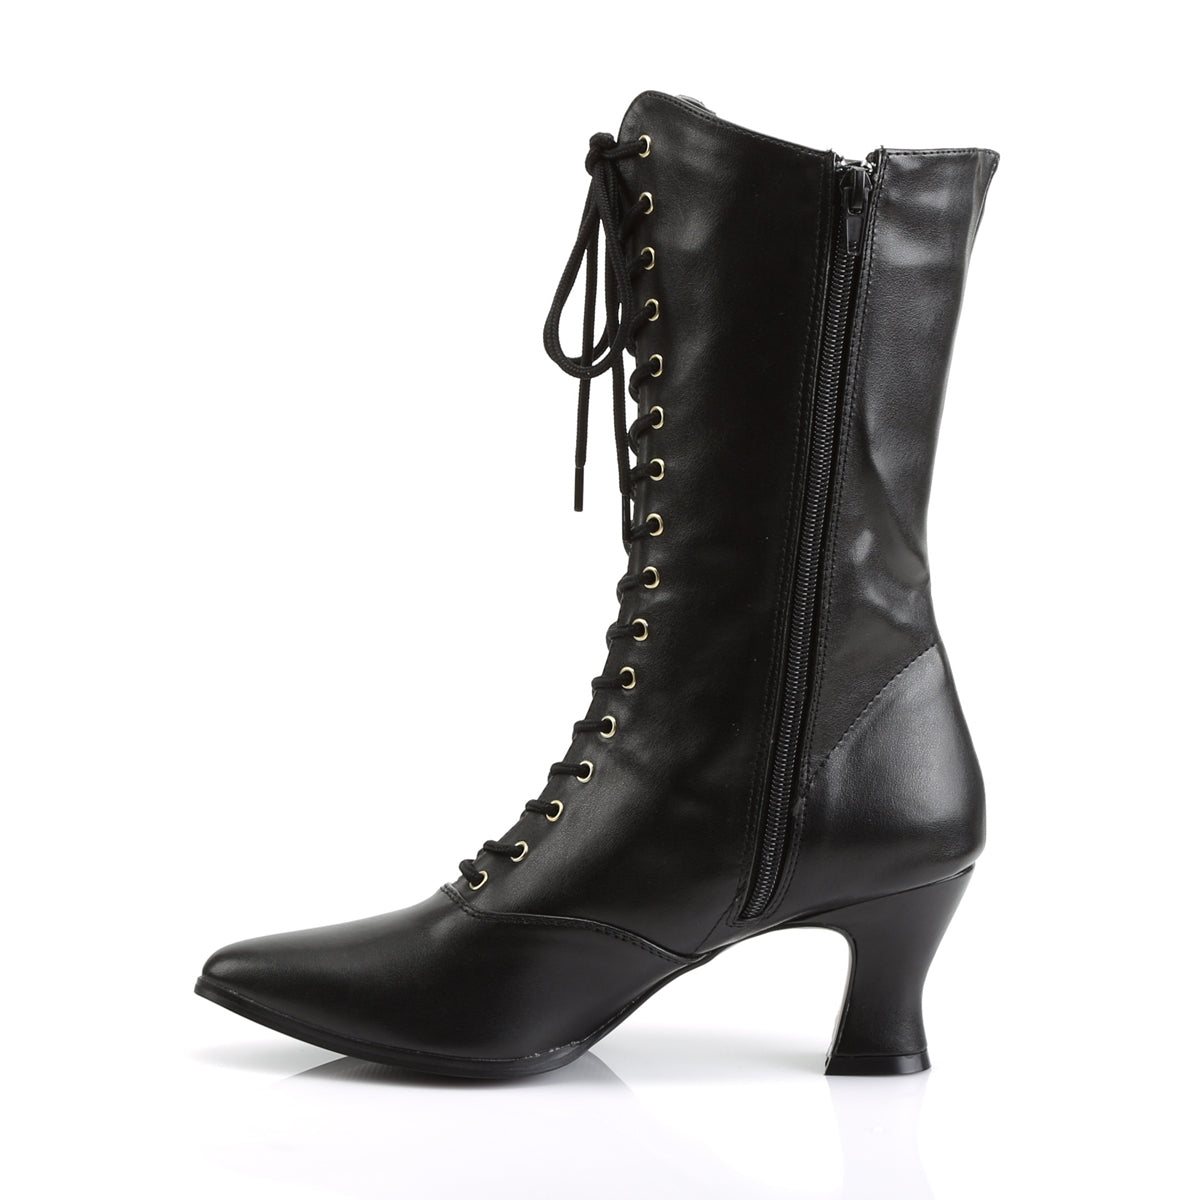 VICTORIAN-120 3 Inch Heel Black Women's Boots Funtasma Costume Shoes 